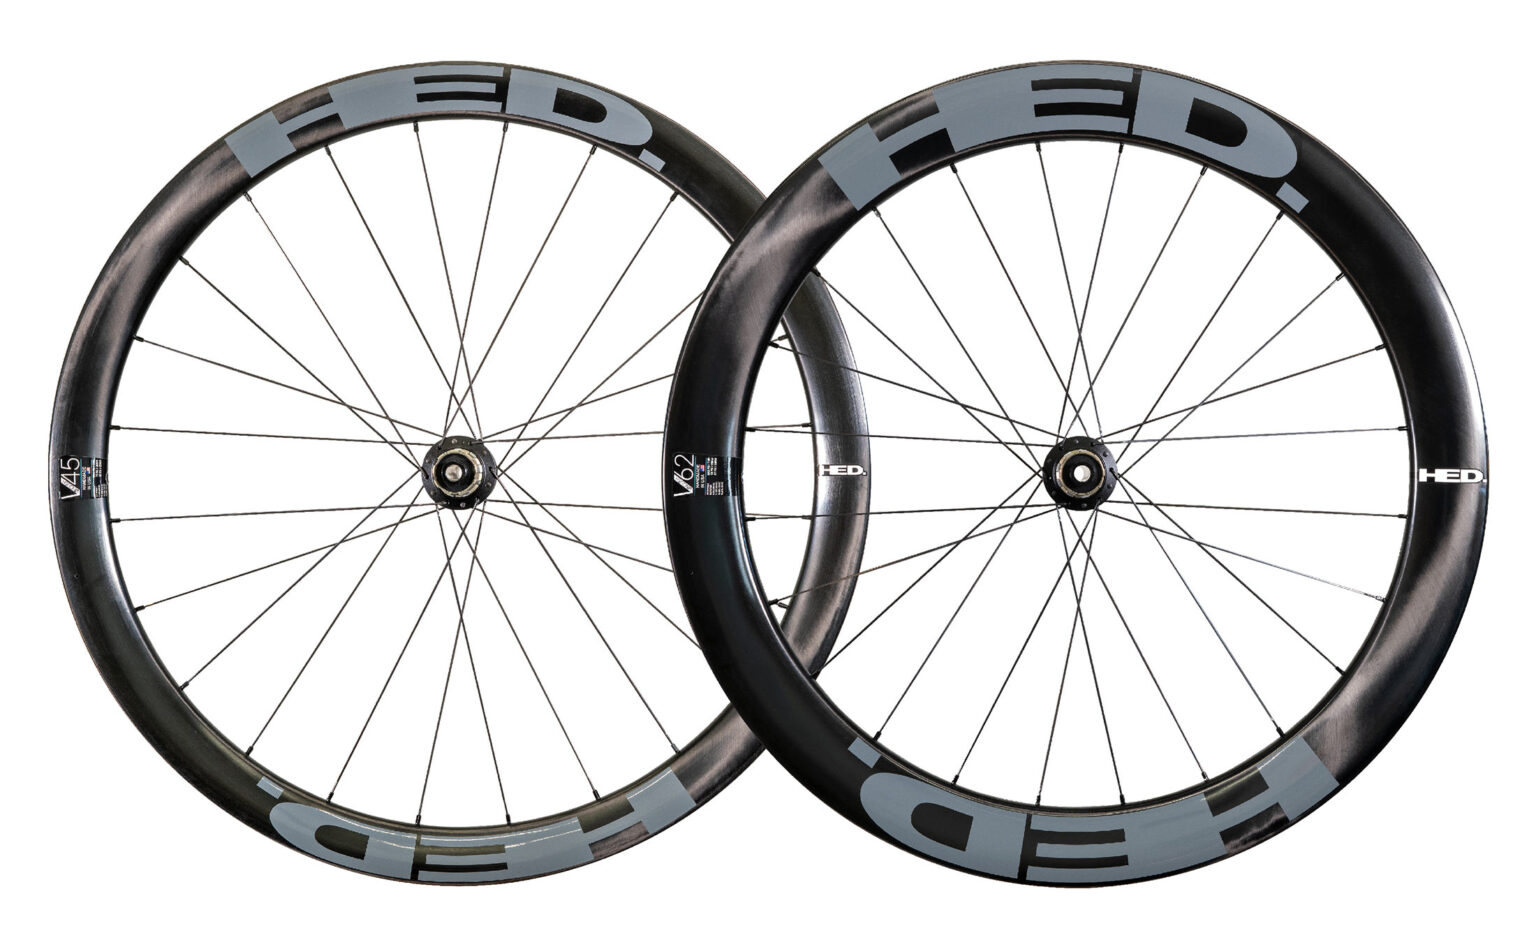 HED Vanquish road bike wheels shown in different depths